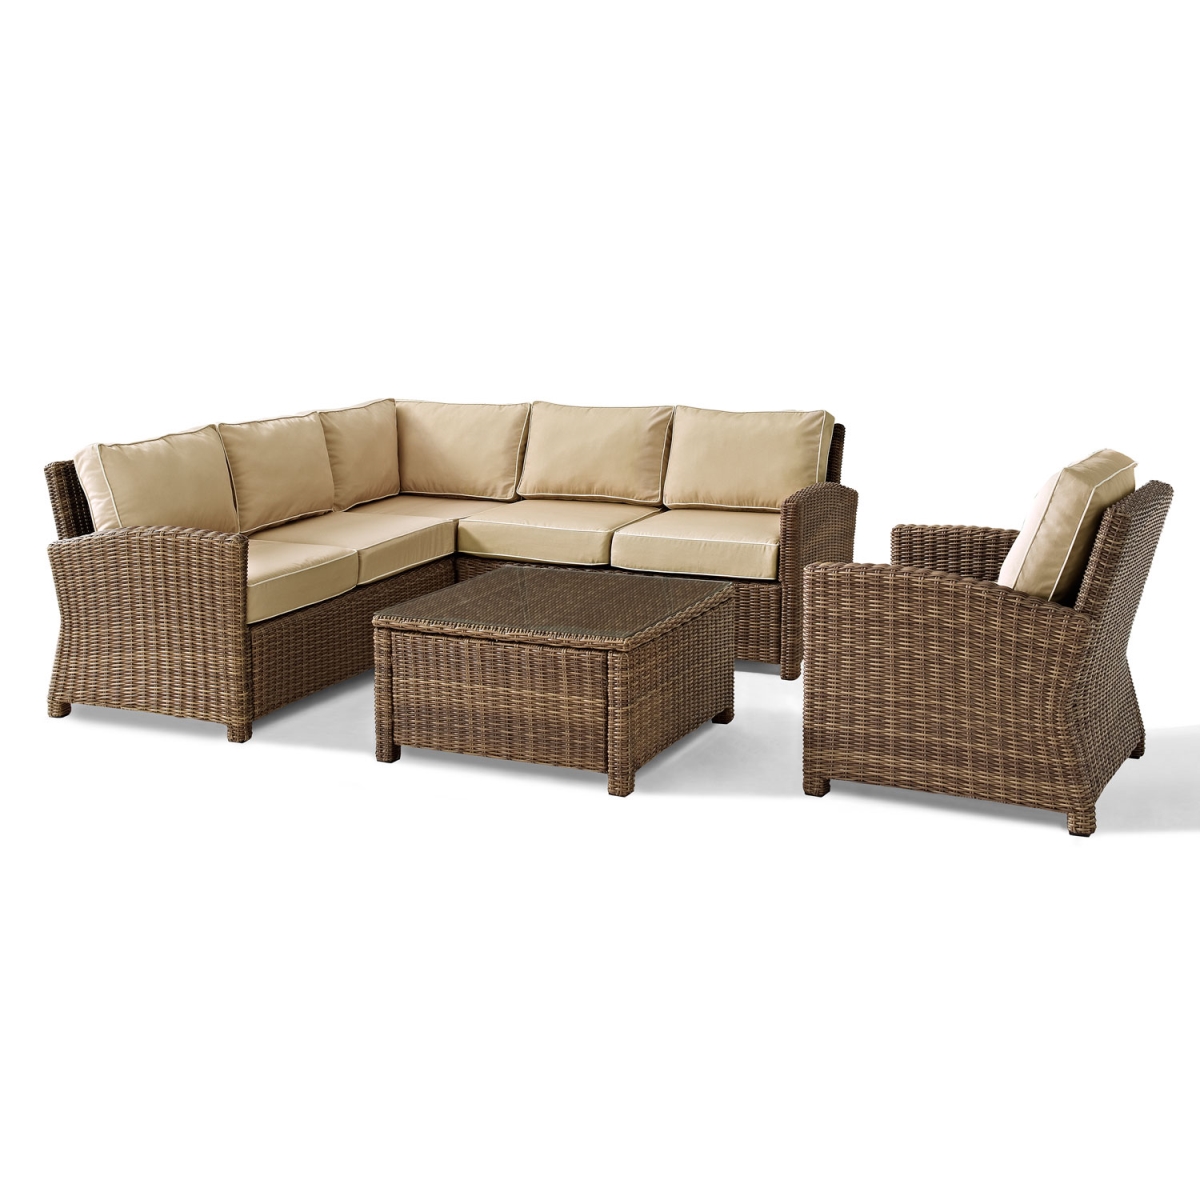 Ko70159-sa 5 Piece Bradenton Outdoor Wicker Seating Set With Sand Cushions - Weathered Brown